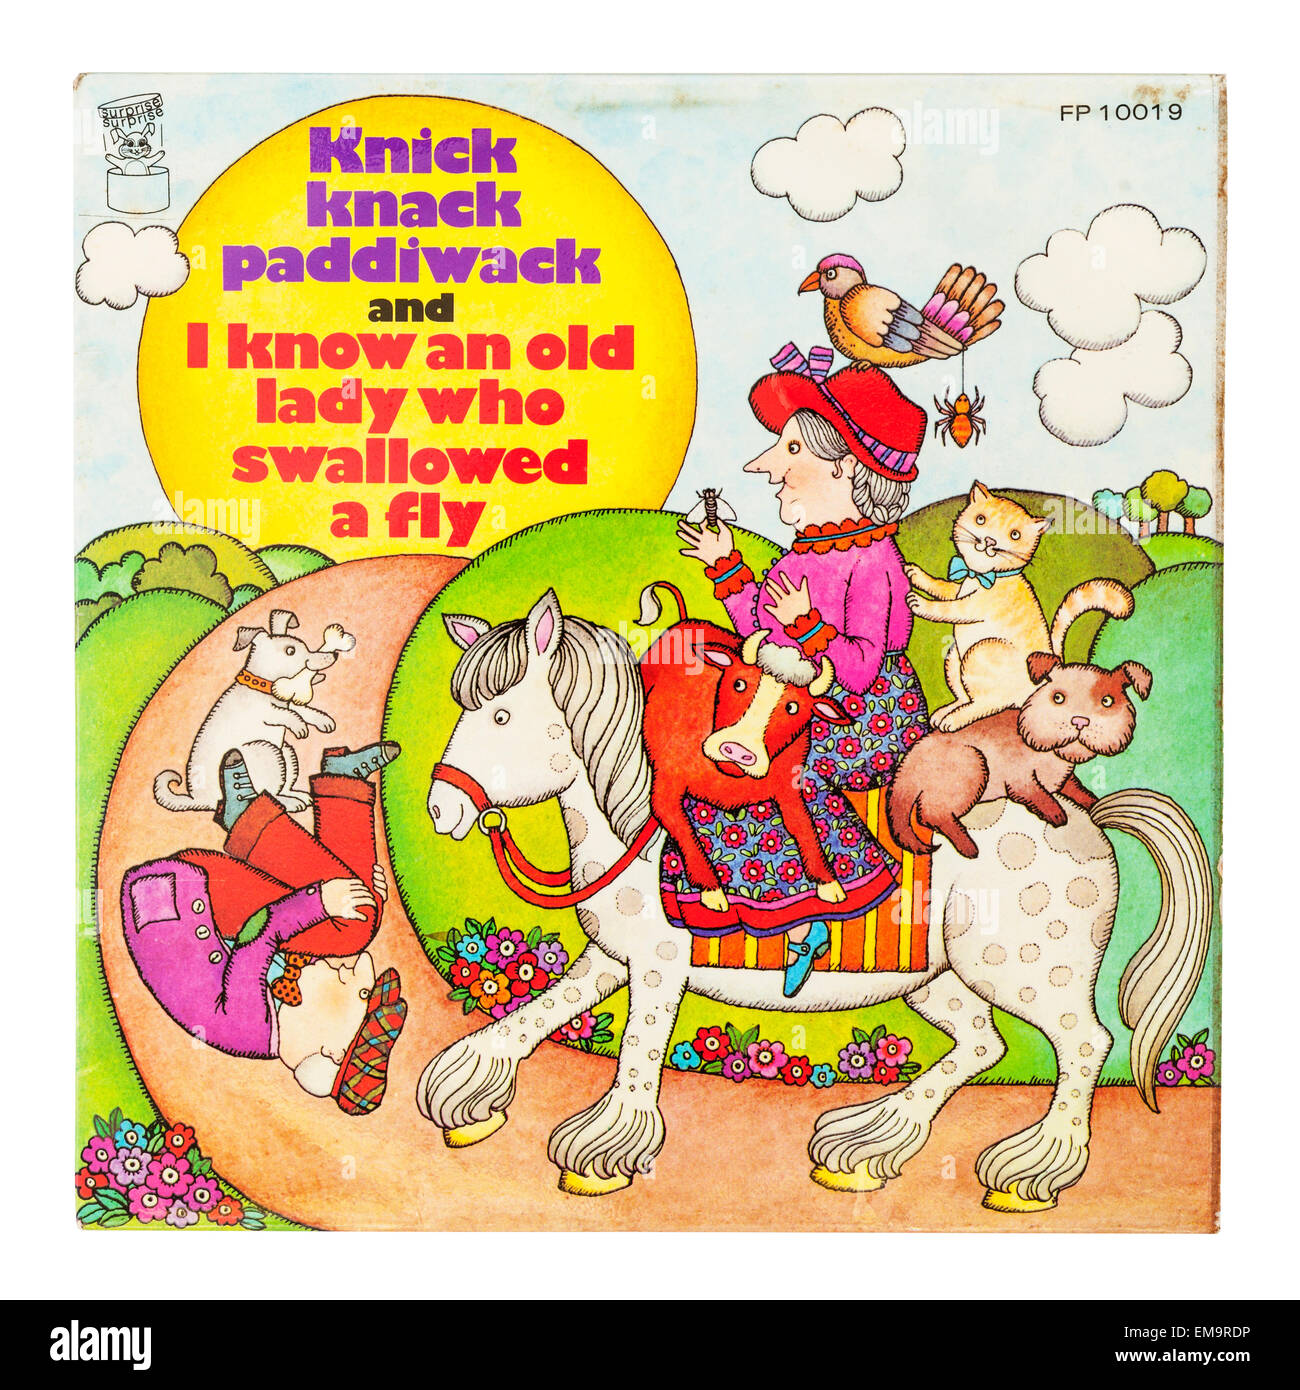 A Childrens Vinyl record called Knick Knack Paddiwack on a white background Stock Photo